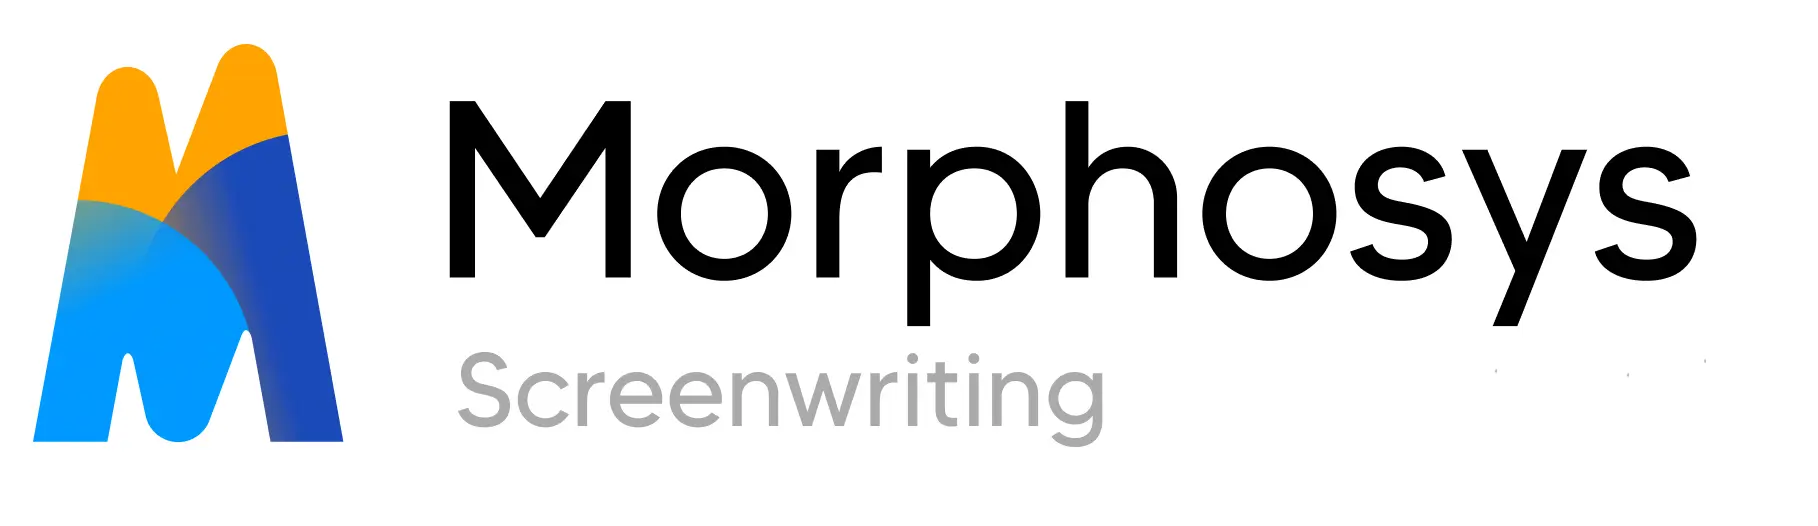 Morphosys Drehbuch-Logo